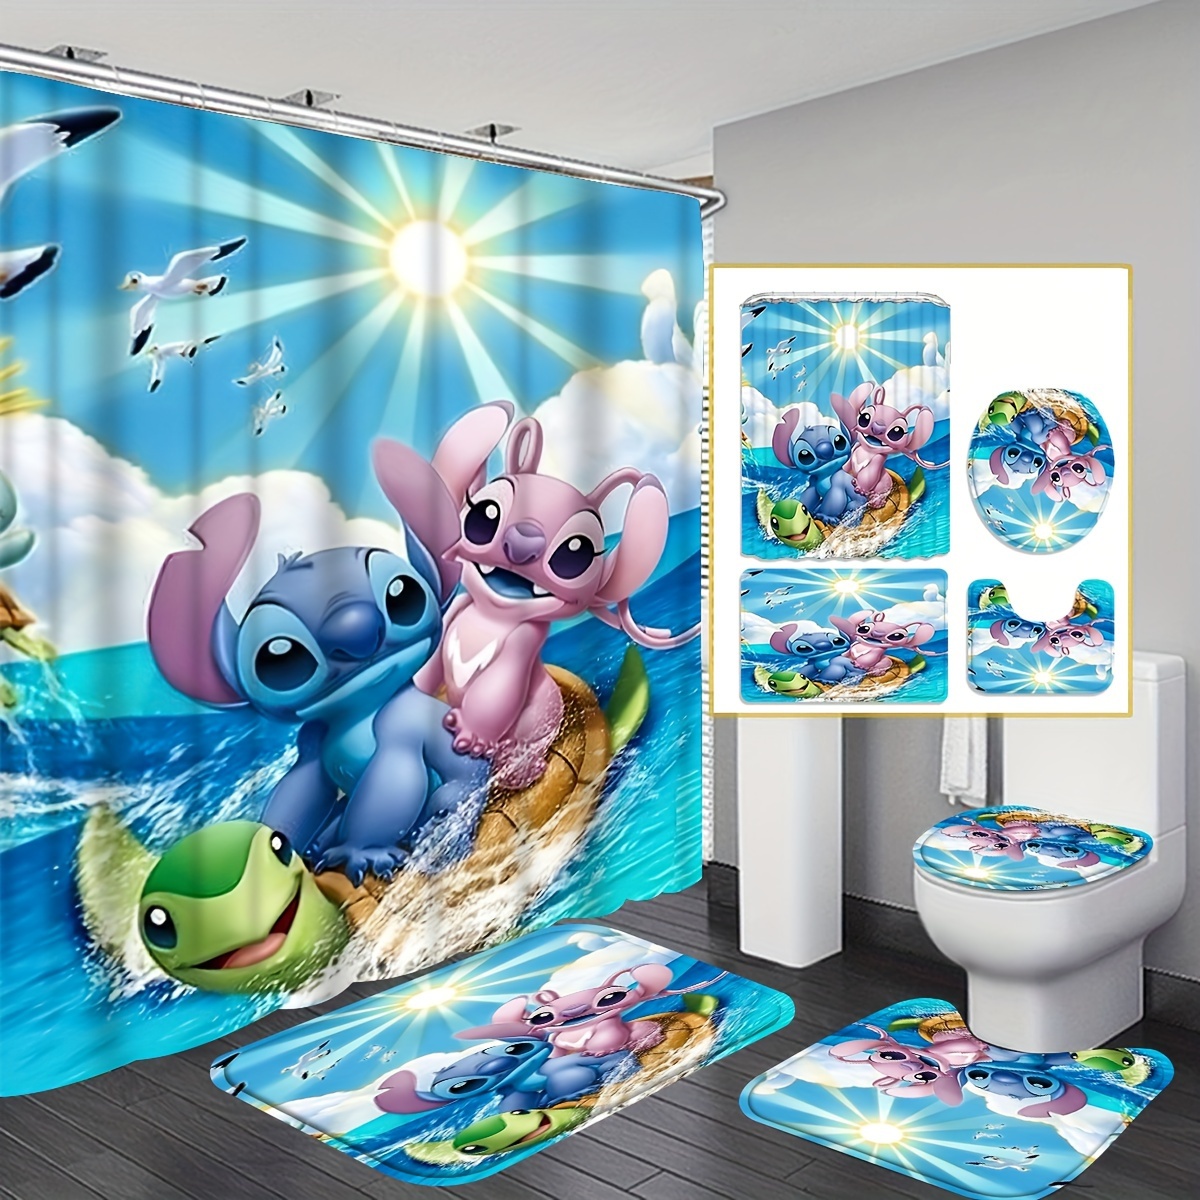 

Disney Stitch Themed Bathroom Set - Waterproof Shower Curtain, Non-slip Mats & Hooks Included